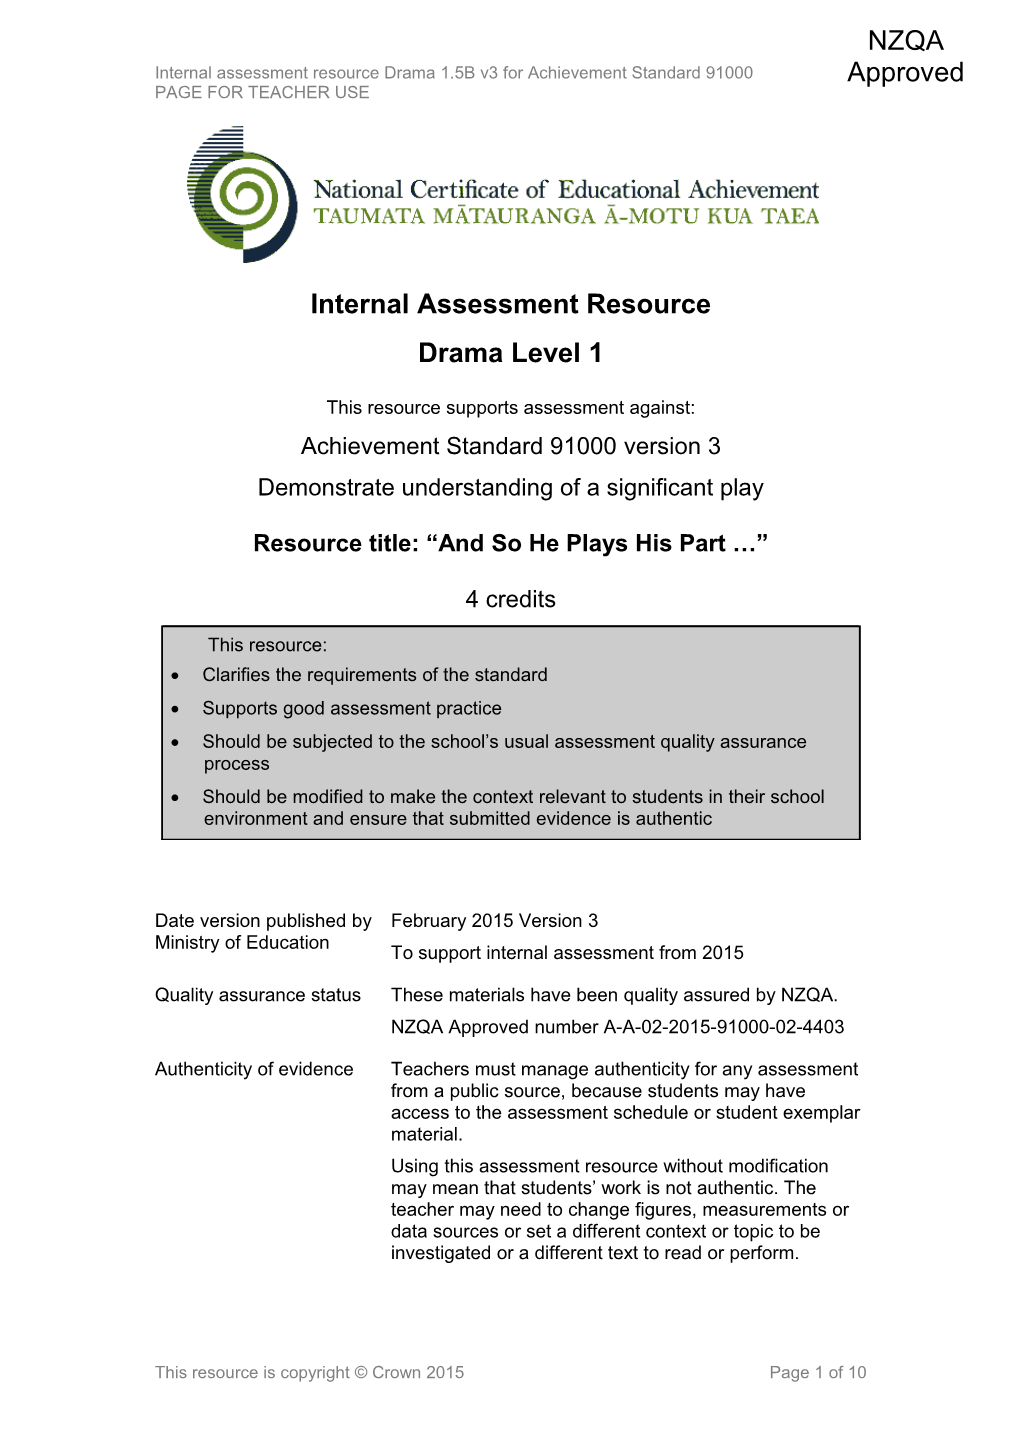 Level 1 Drama Internal Assessment Resource